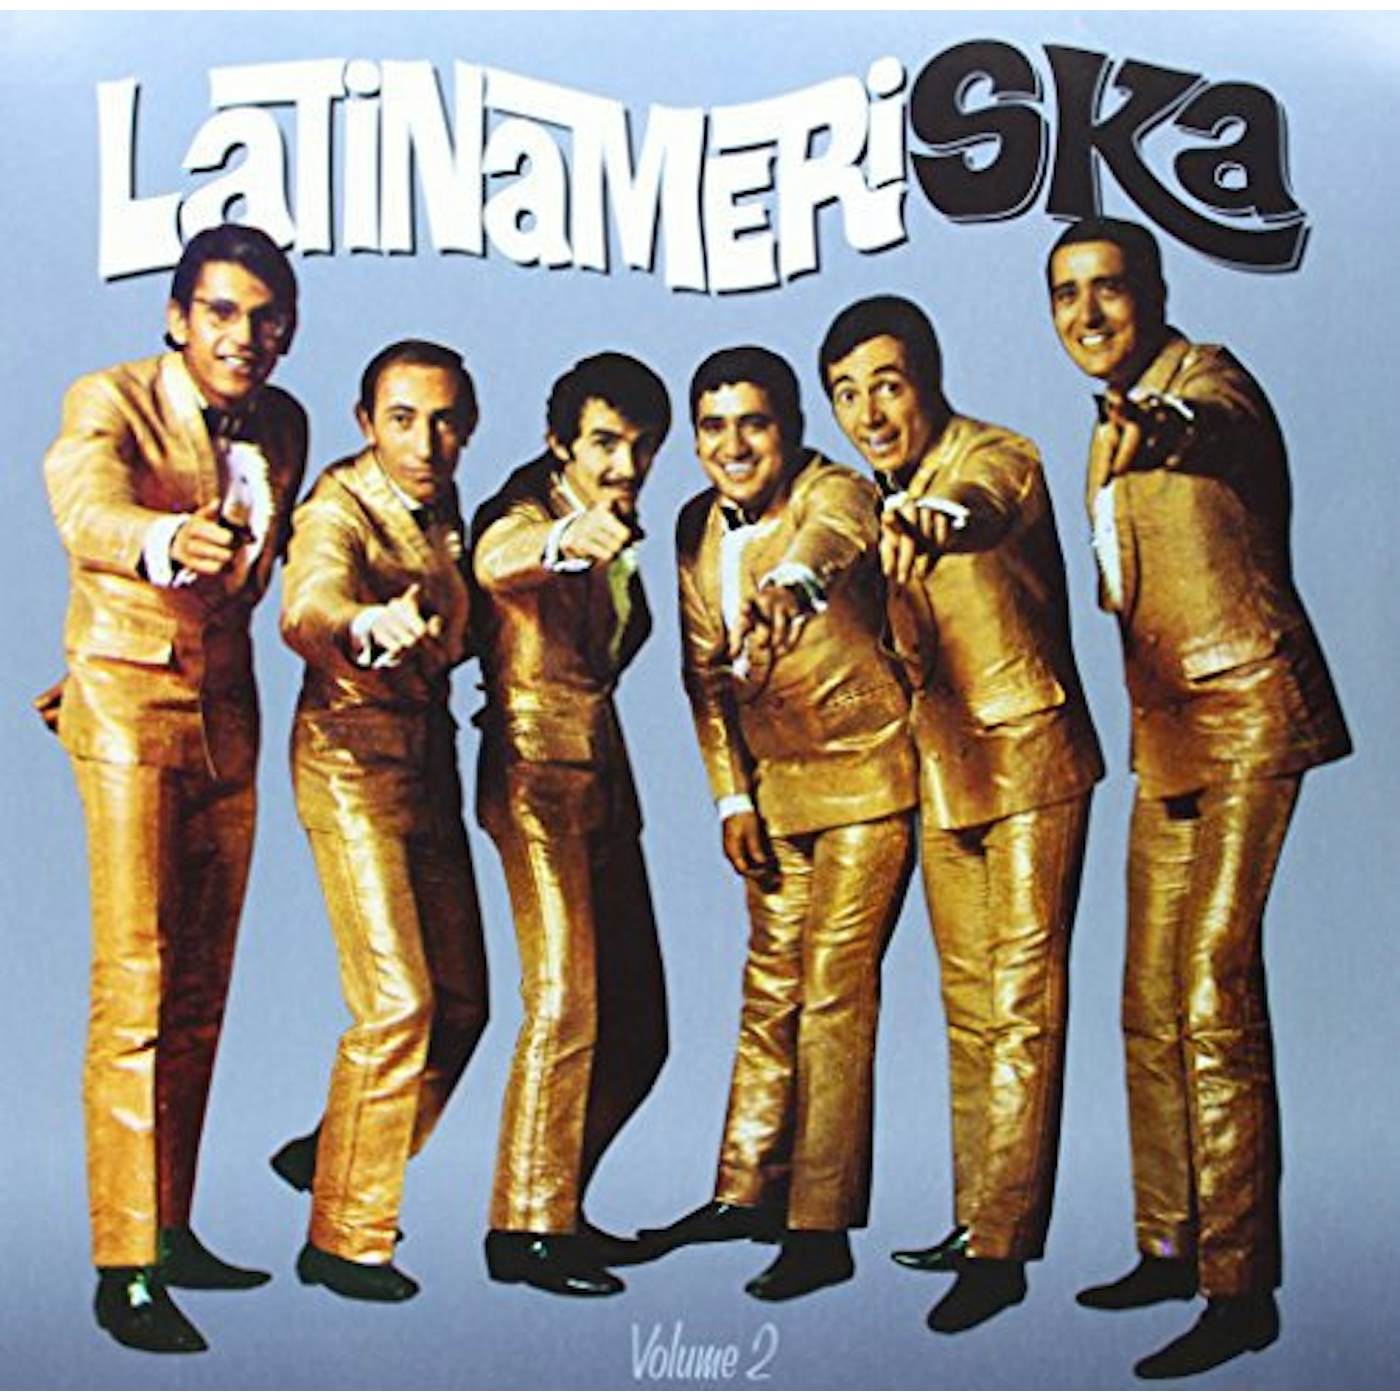 LATINAMERISKA 2 Vinyl Record